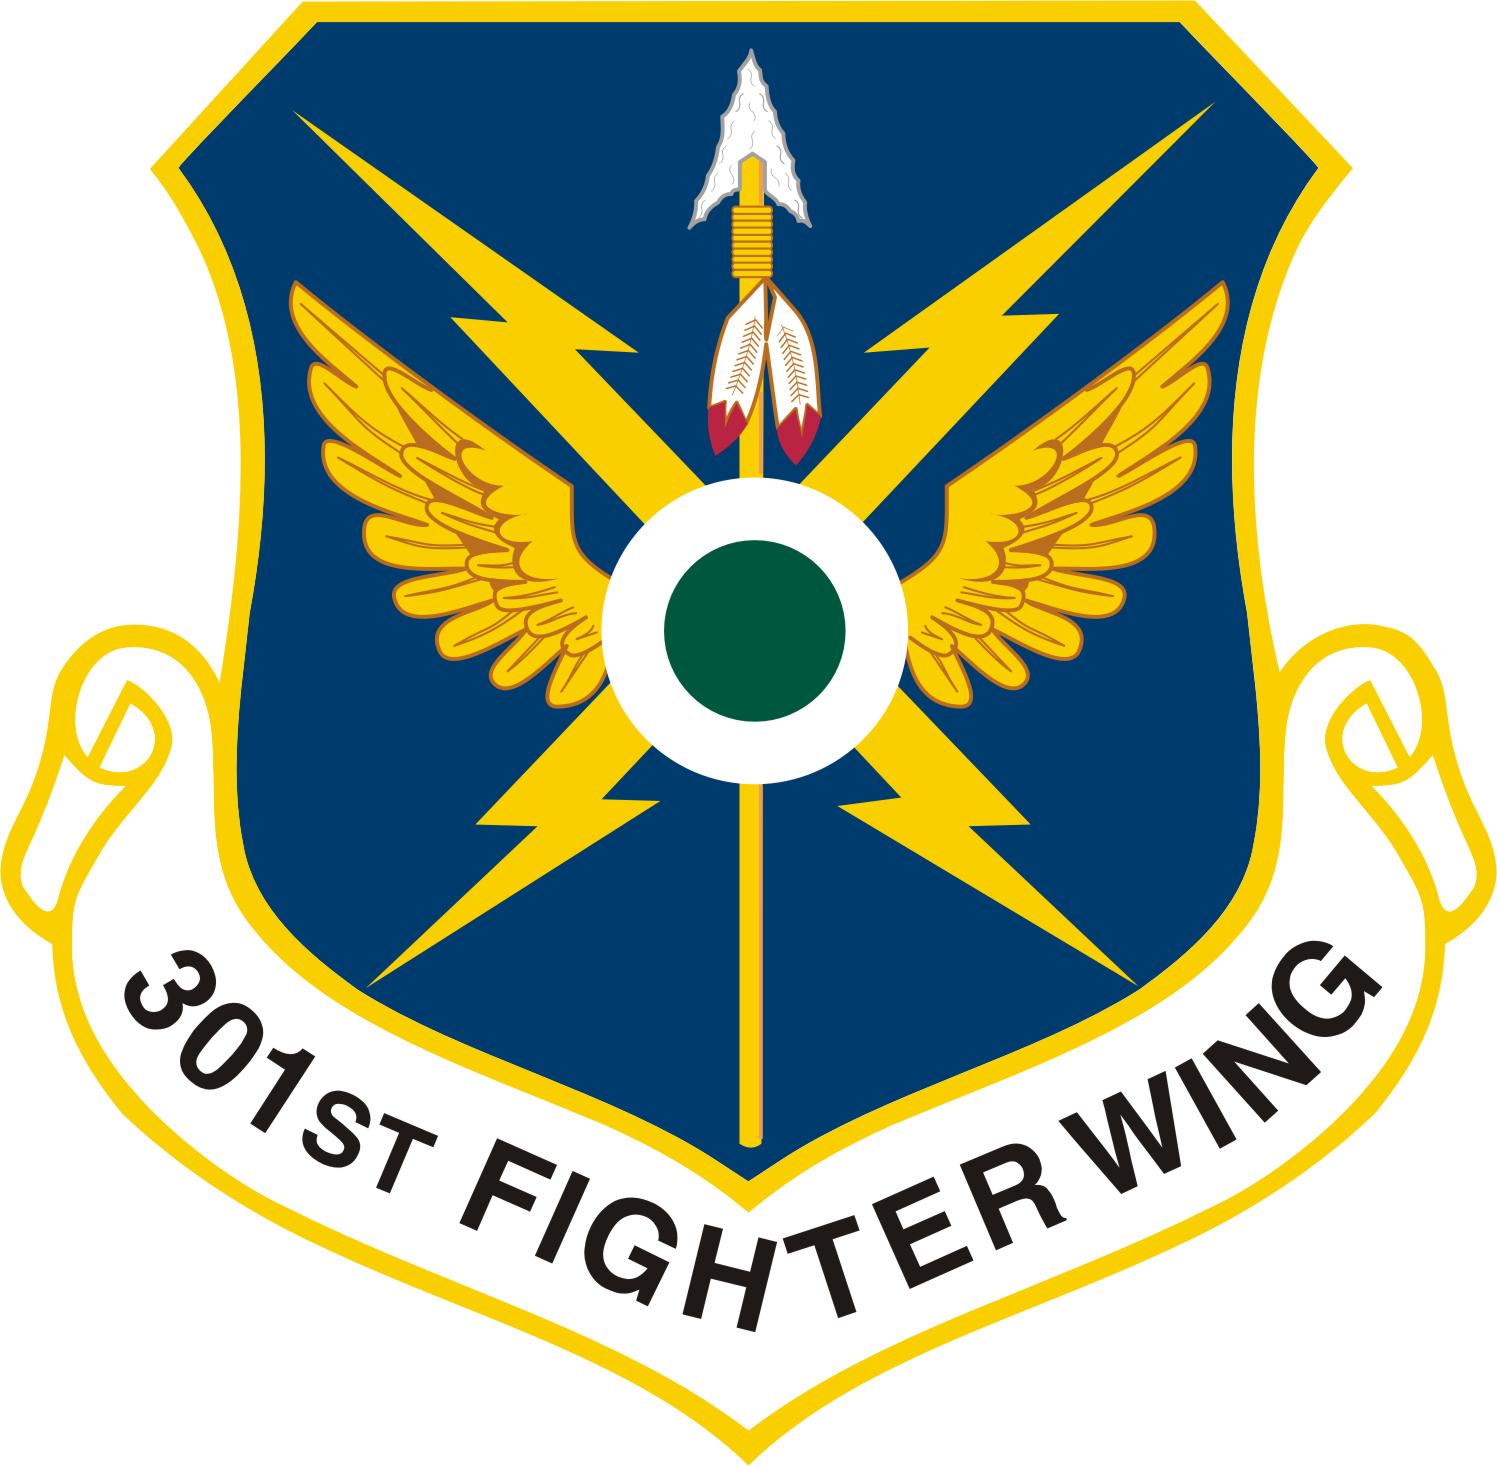 35 Fighter Wing logo. 57 Fighter Wing logo. Saint Fighter. Force shield